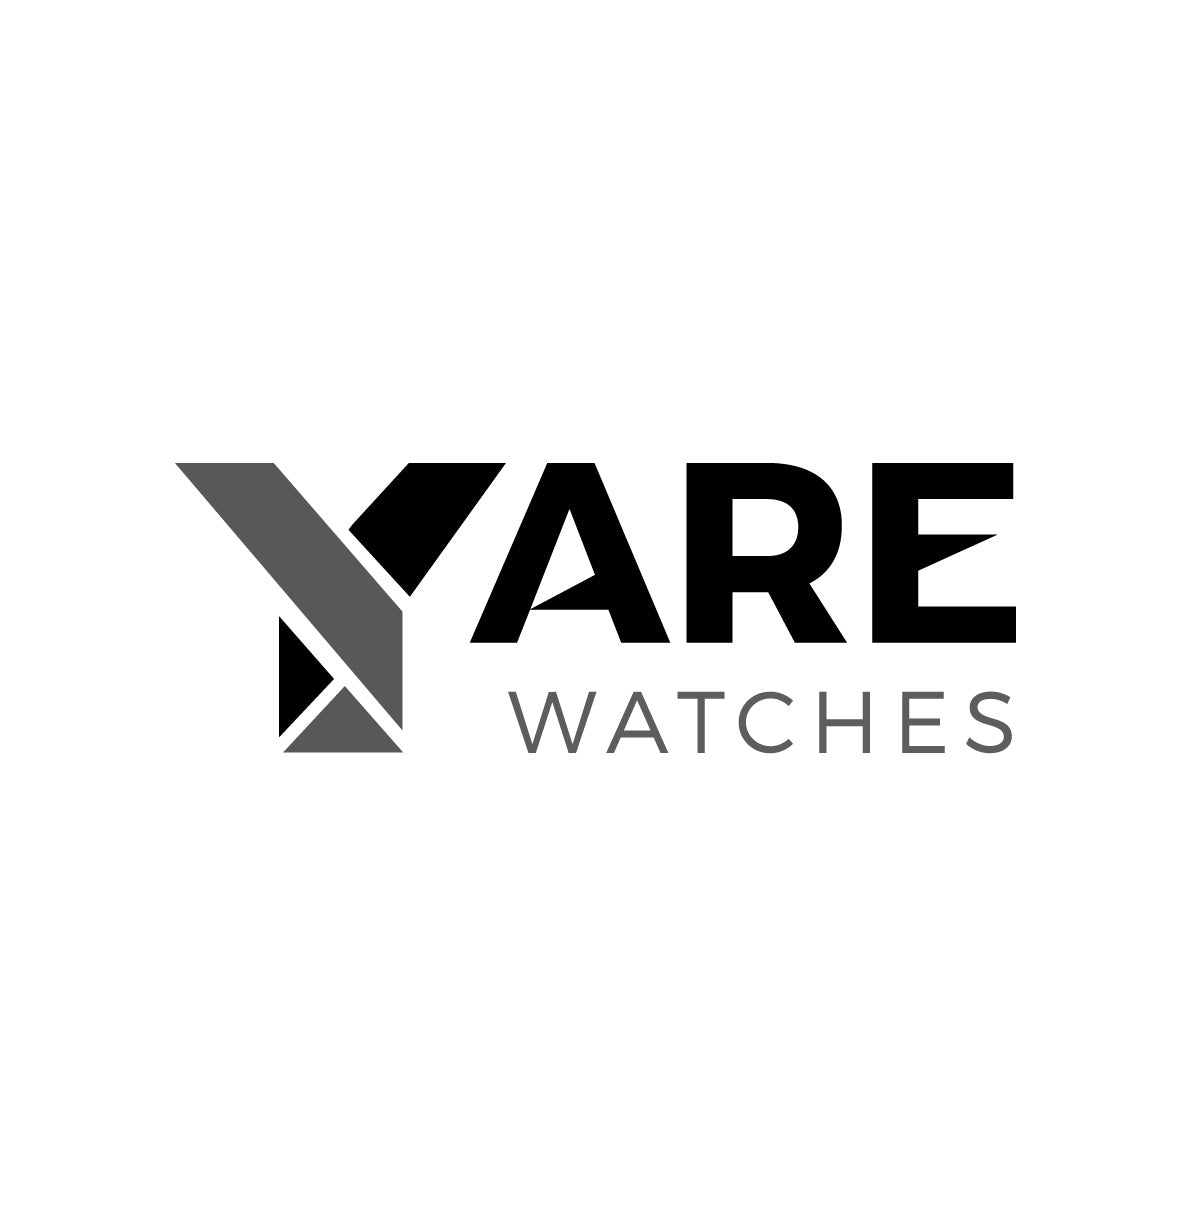 Smart Watch T500 أسود – Yalla Call